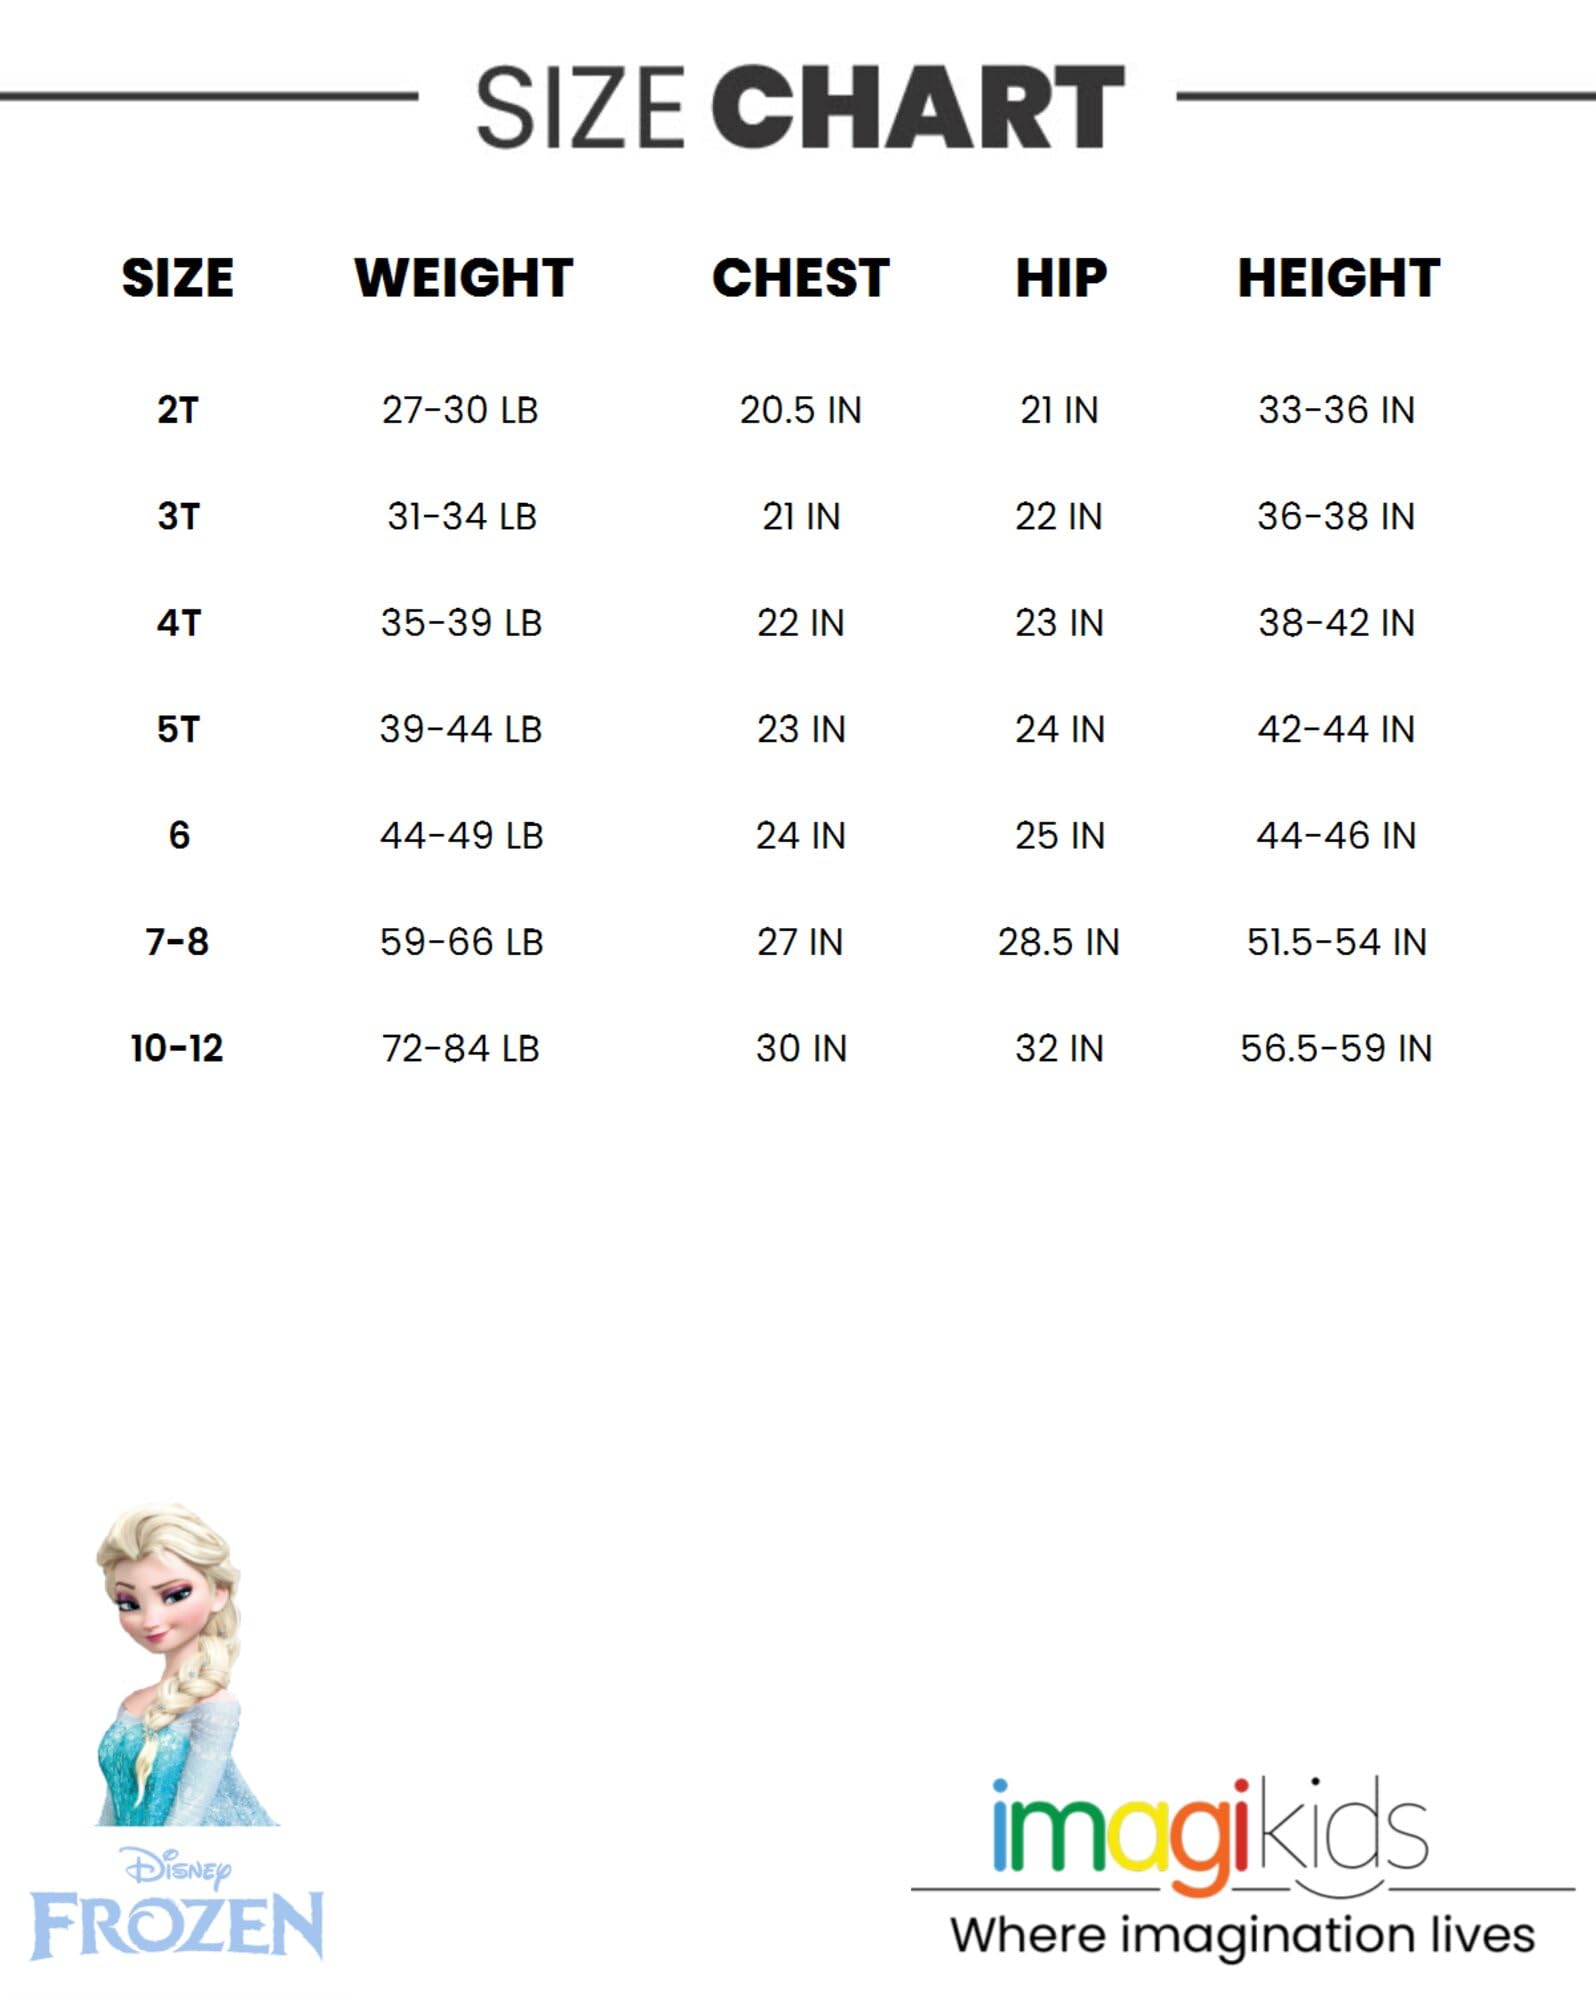 Disney Princess Moana Frozen Girls T-Shirt Tulle Mesh Skirt and Scrunchie 3 Piece Outfit Set Toddler to Big Kid